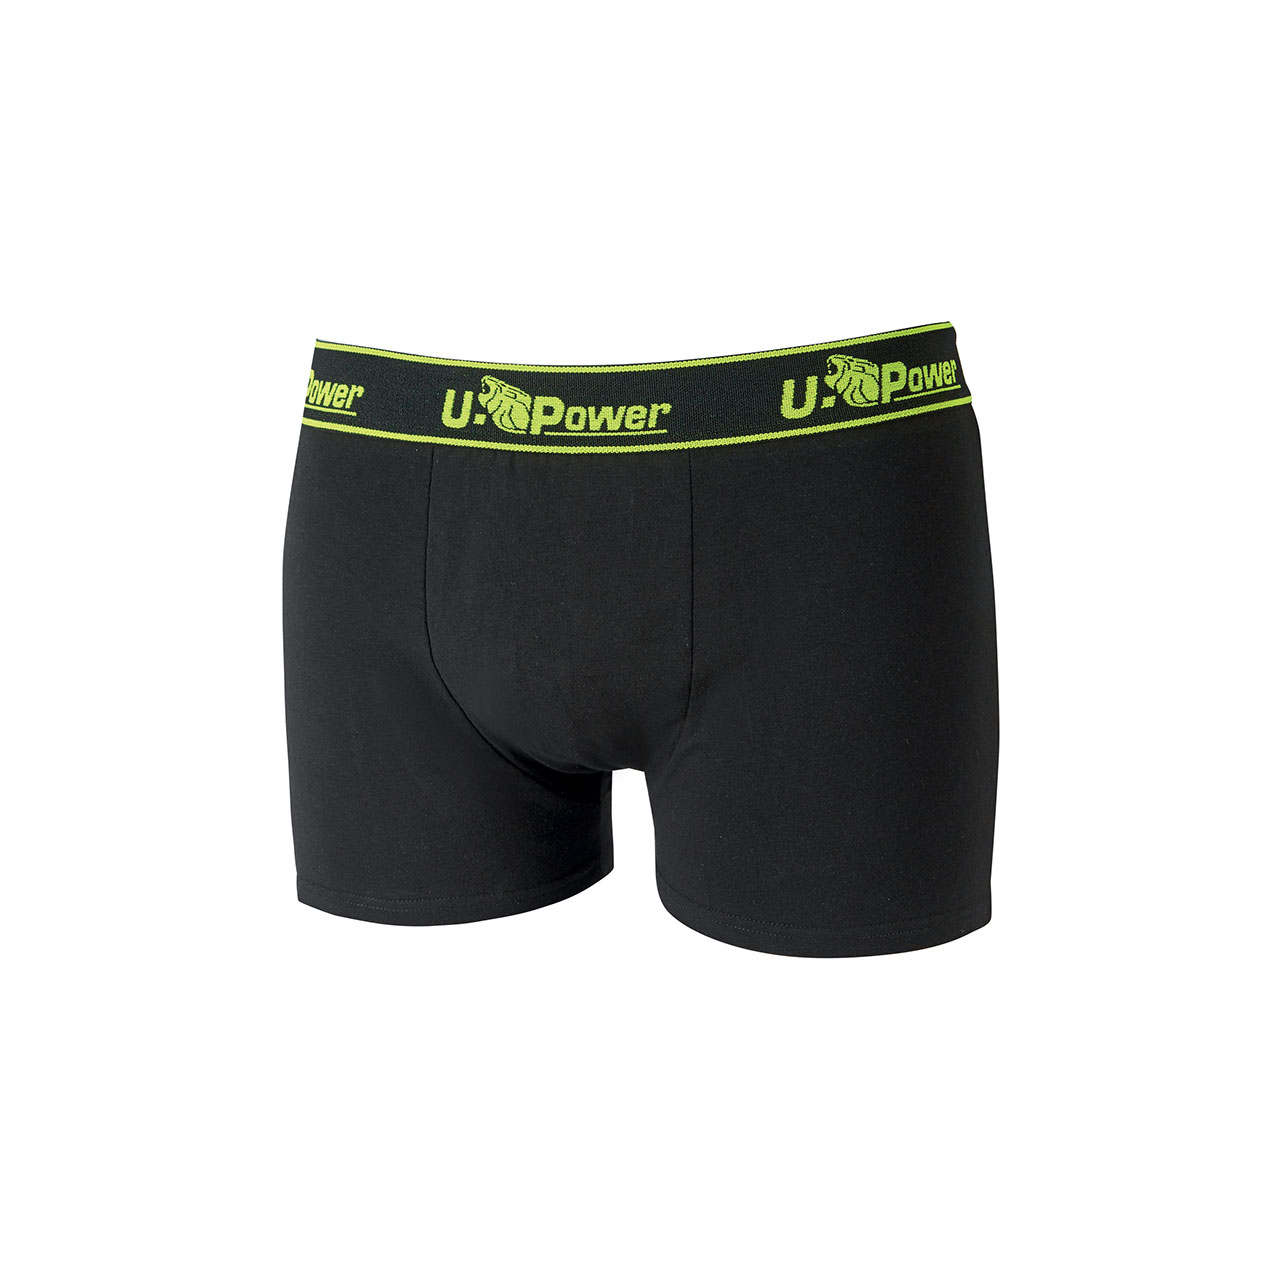 Work boxers shorts men, brand U-Power - Boxer model